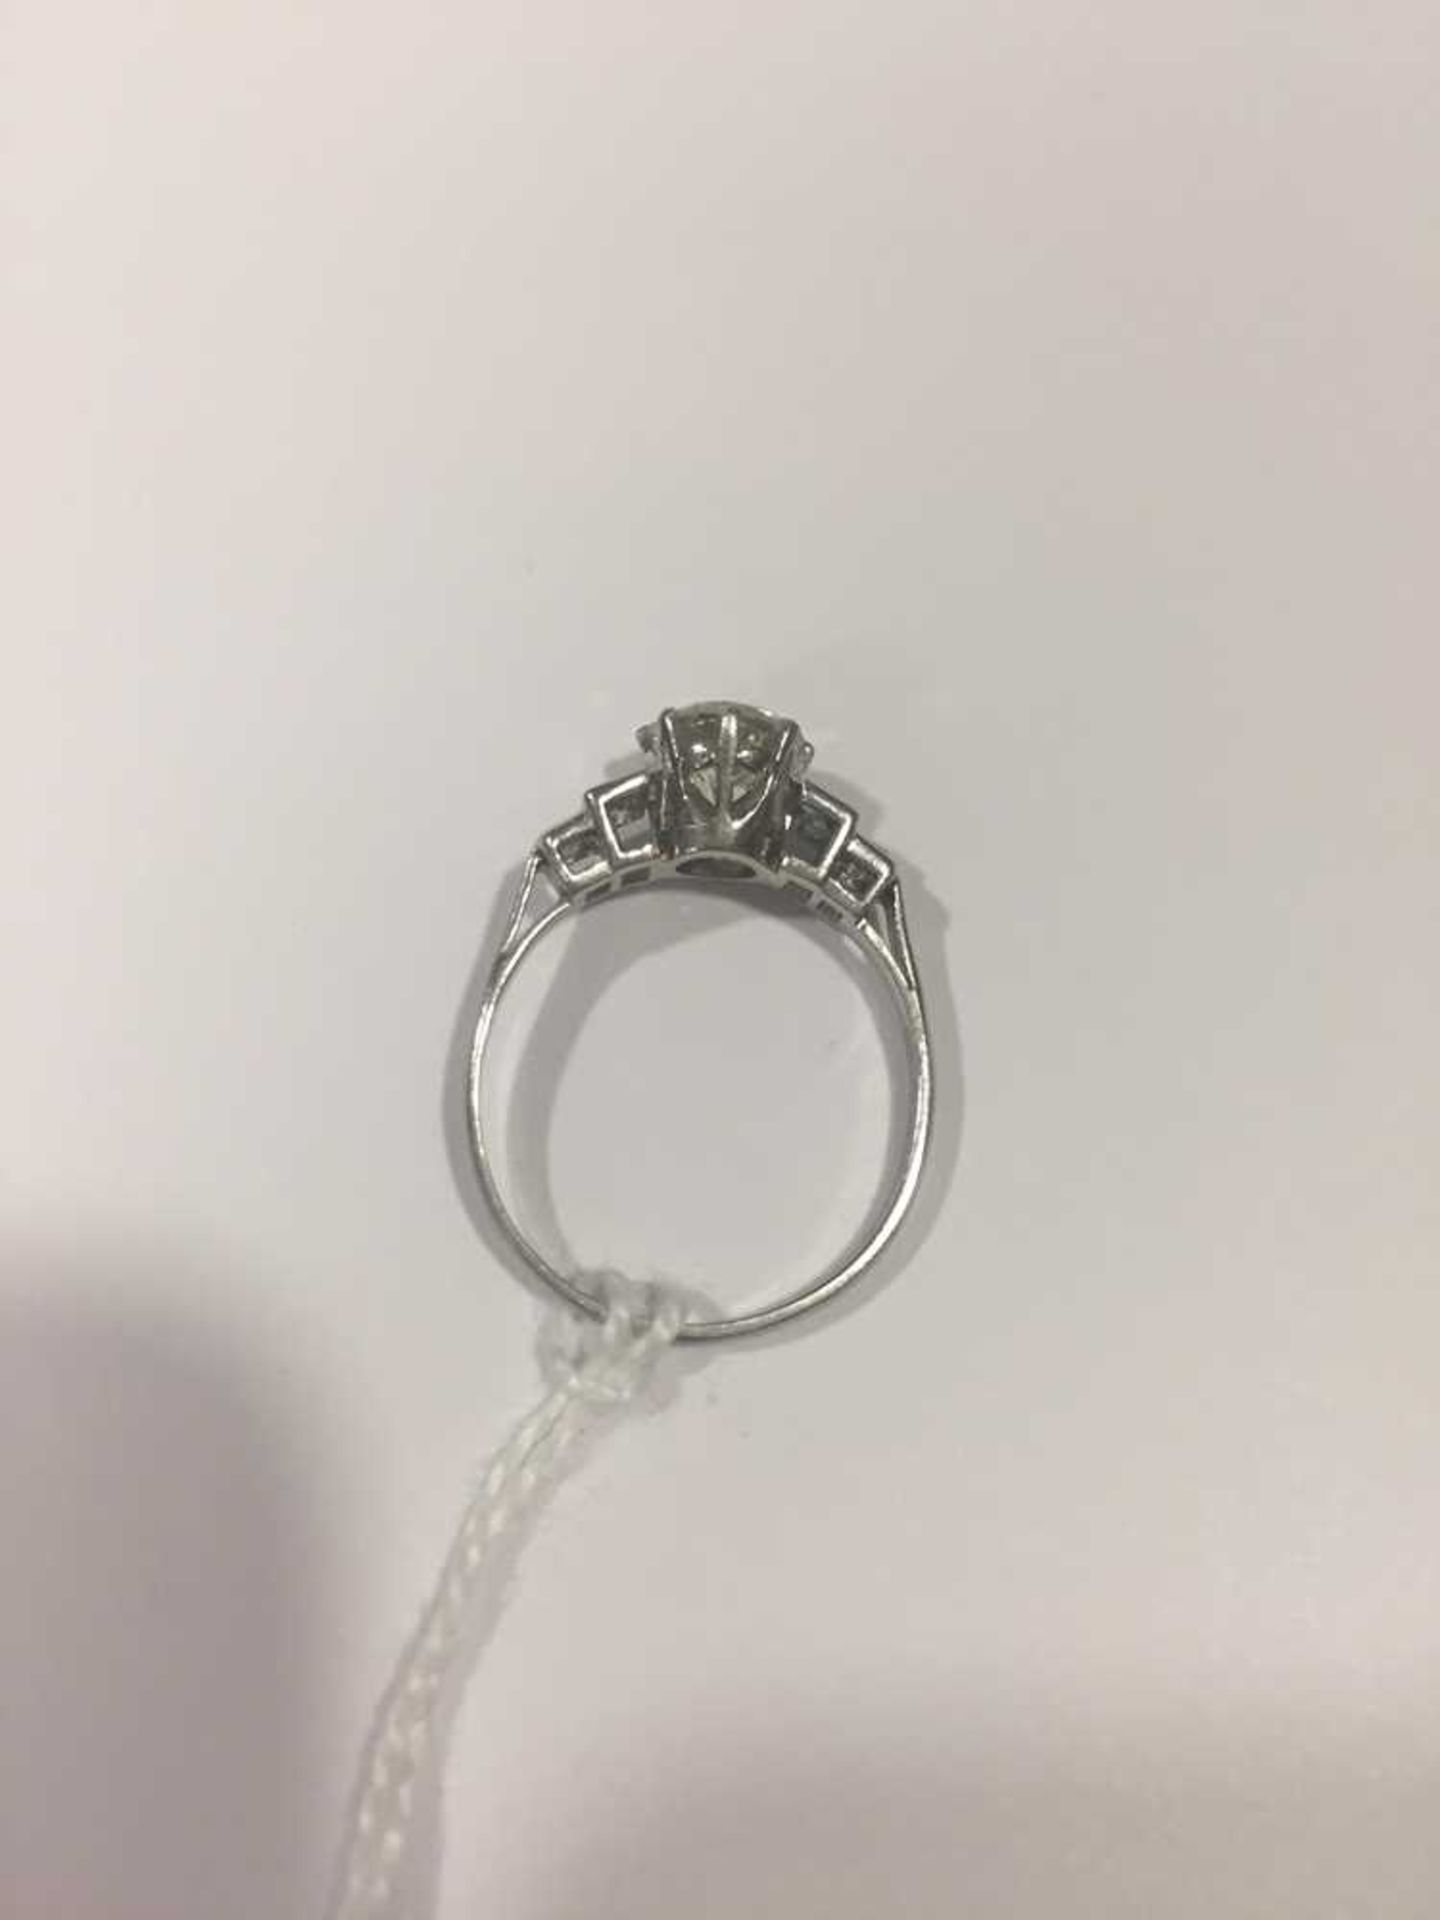 A single stone diamond ring - Image 2 of 7